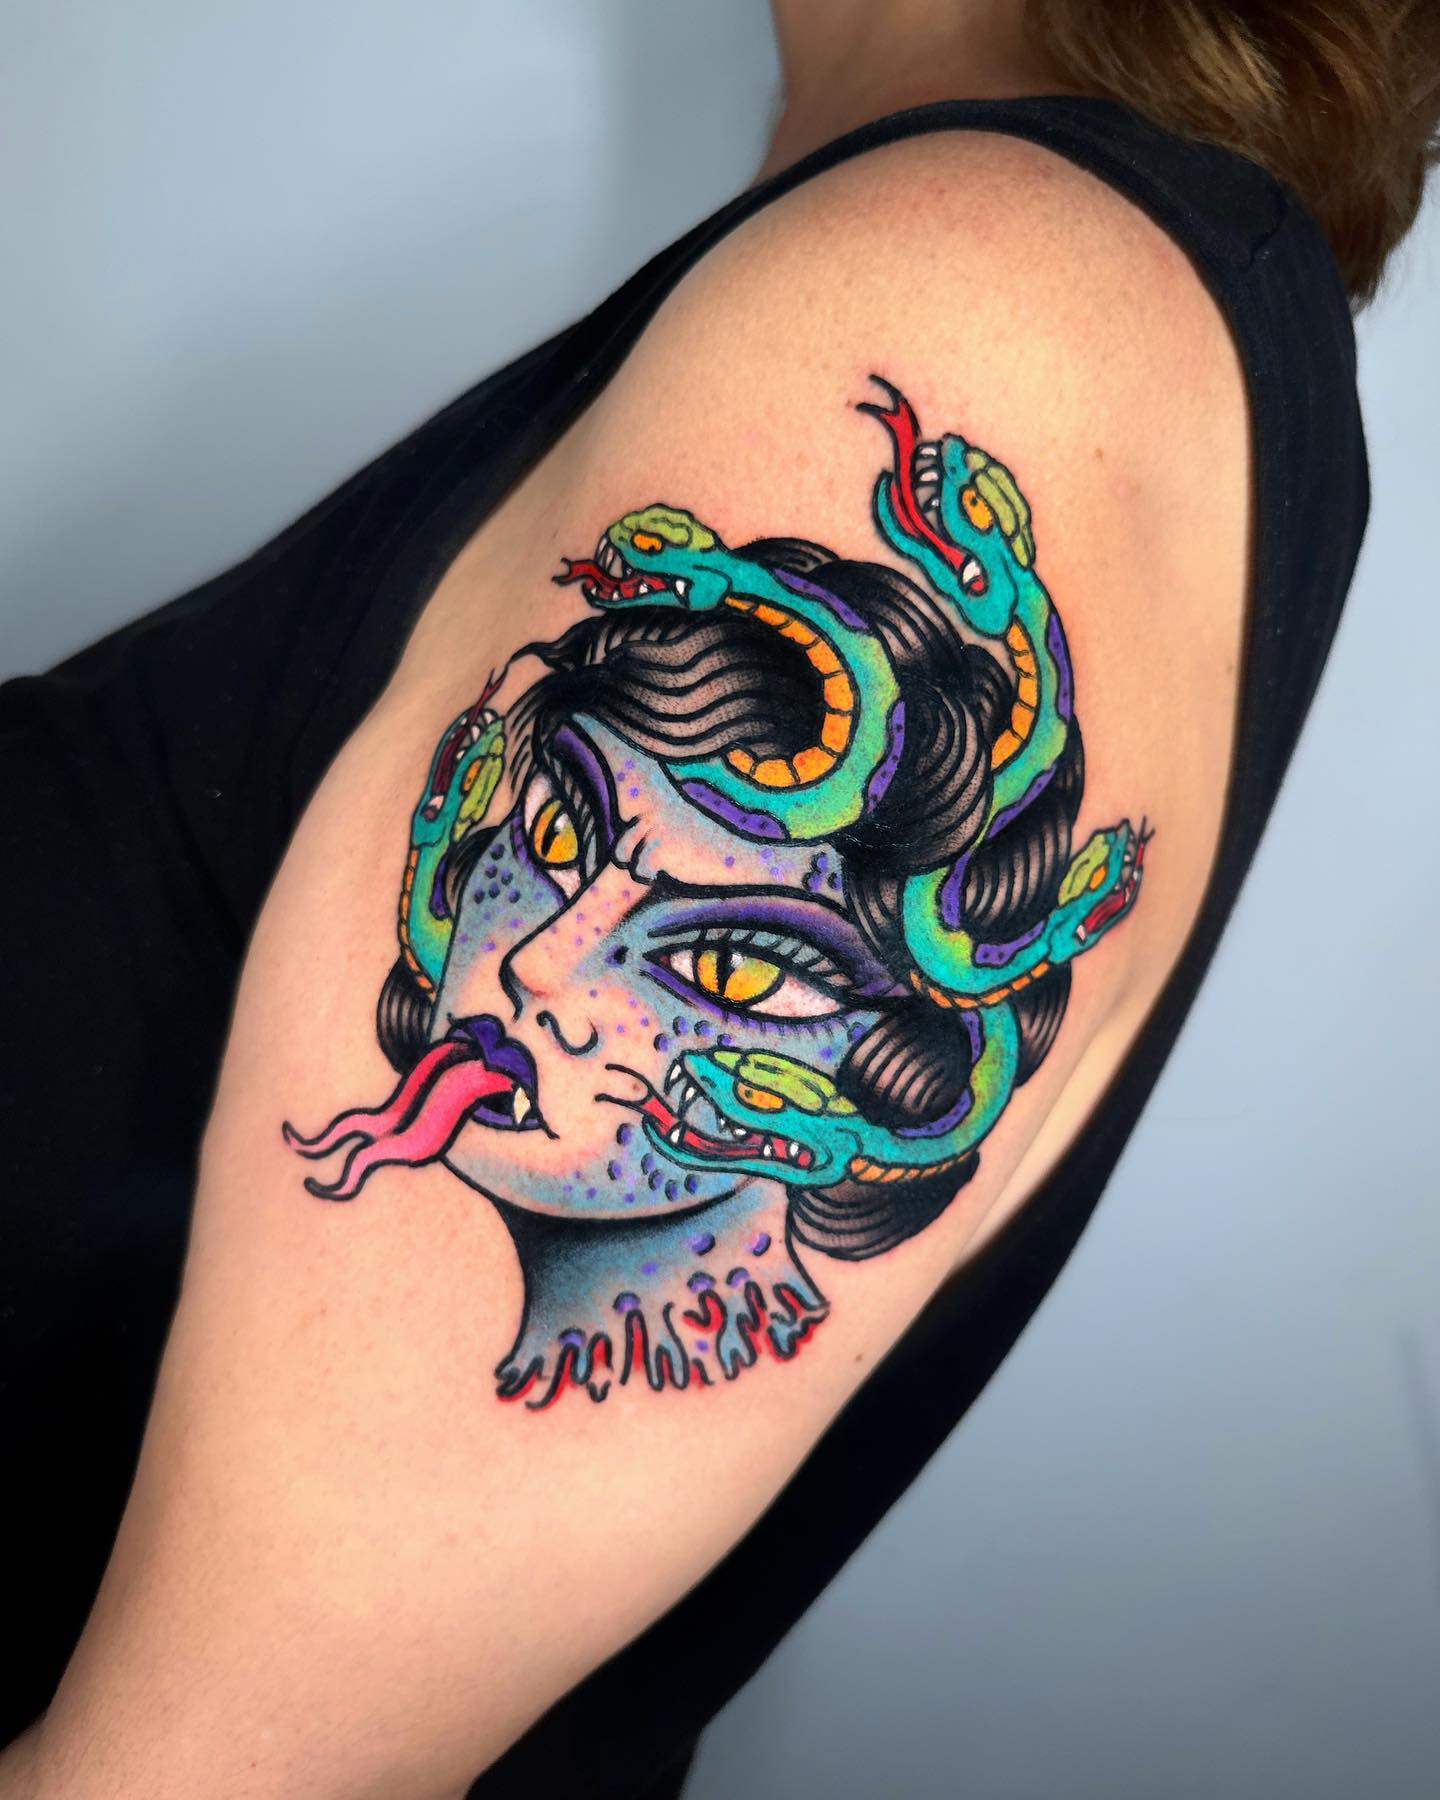 Colorful Traditional Medusa Tattoo on Arm